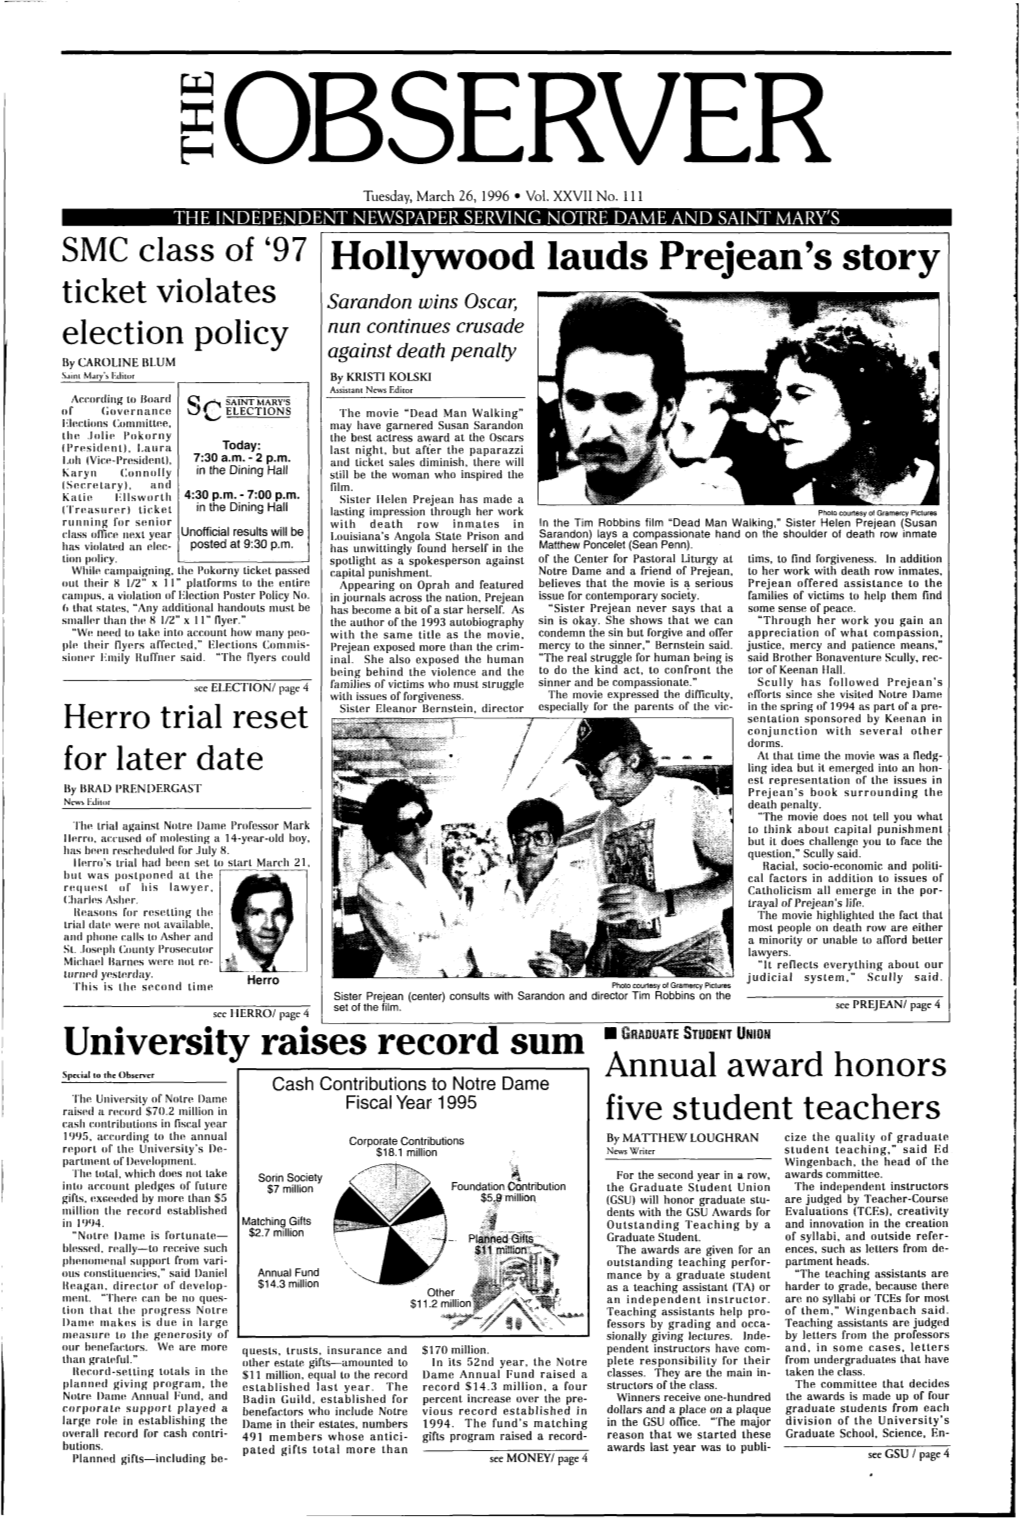 Hollywood Lauds Prejean's Story University Raises Record Sum • GRADUATE STUDENT UNION